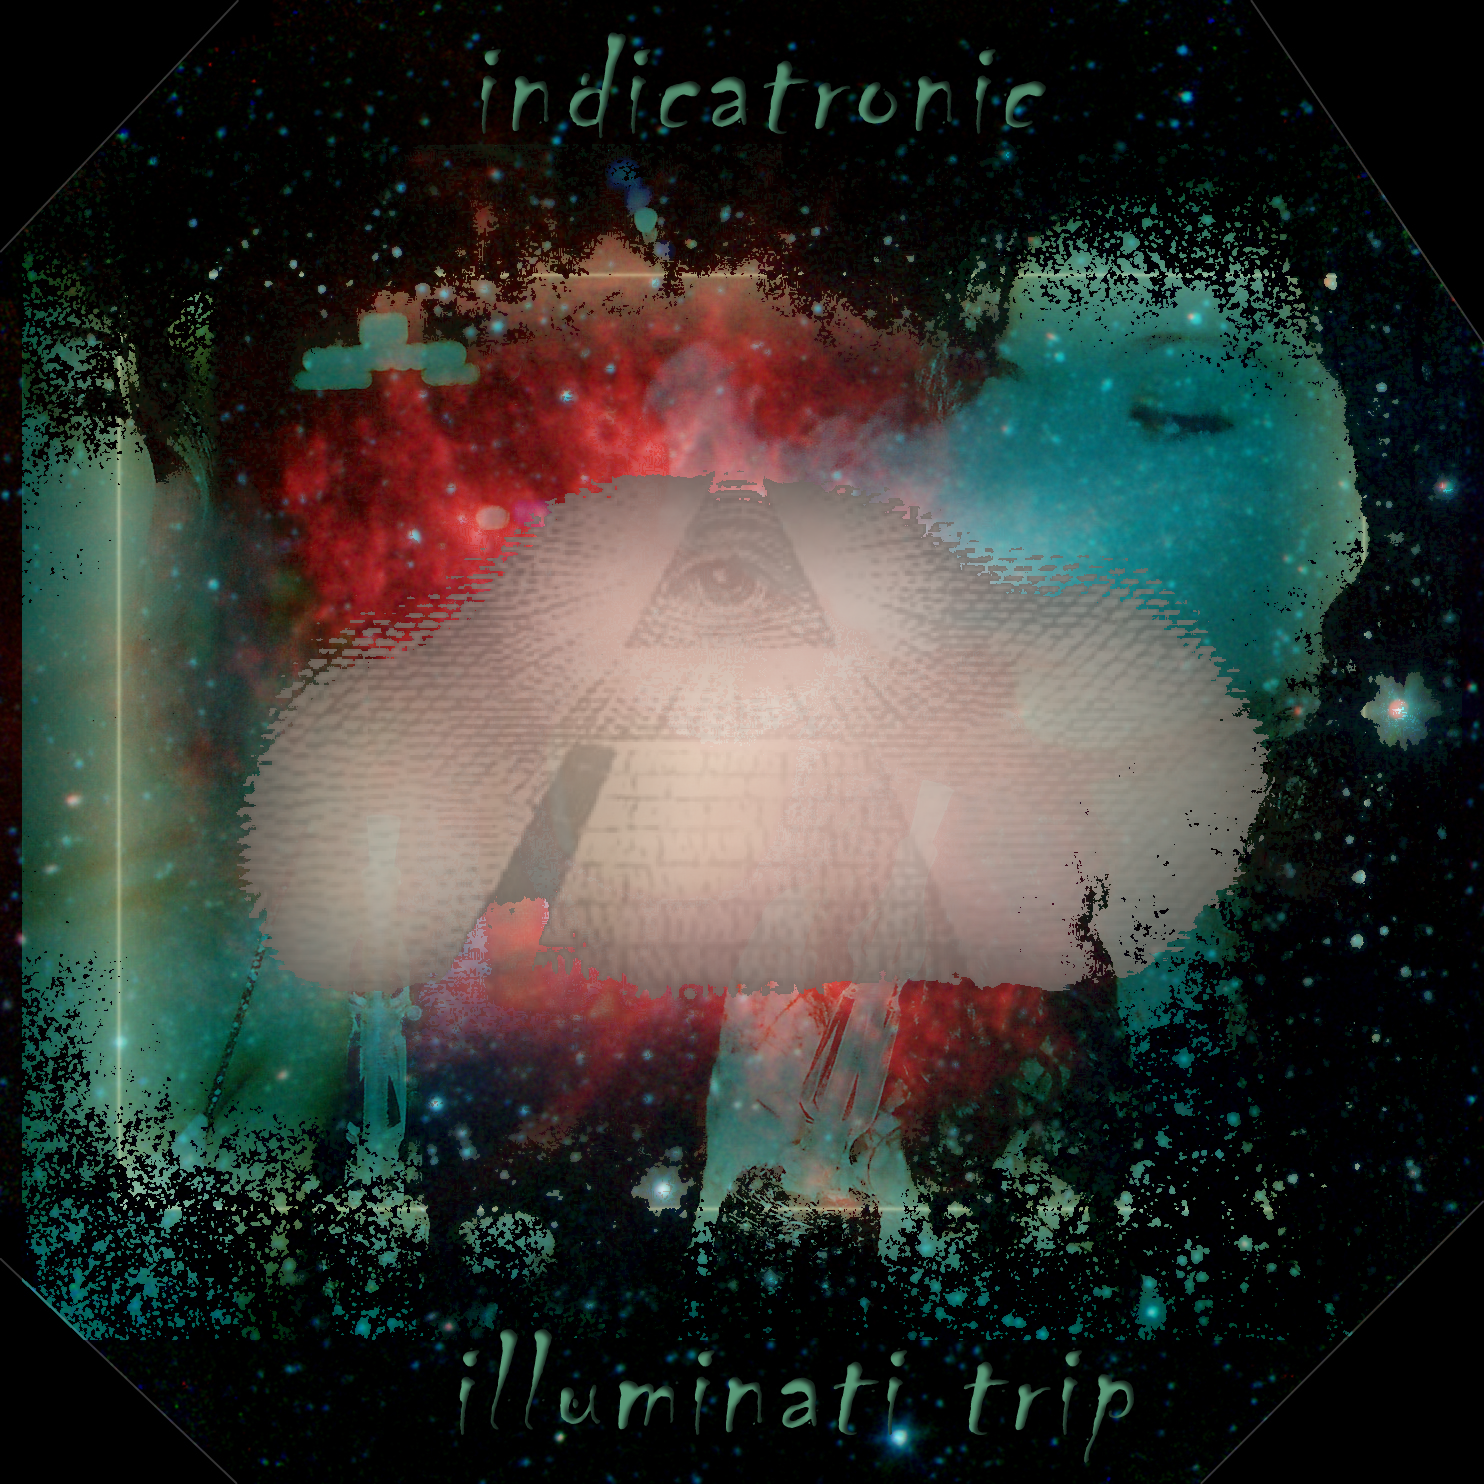 Indicatronic - Illuminati Trip